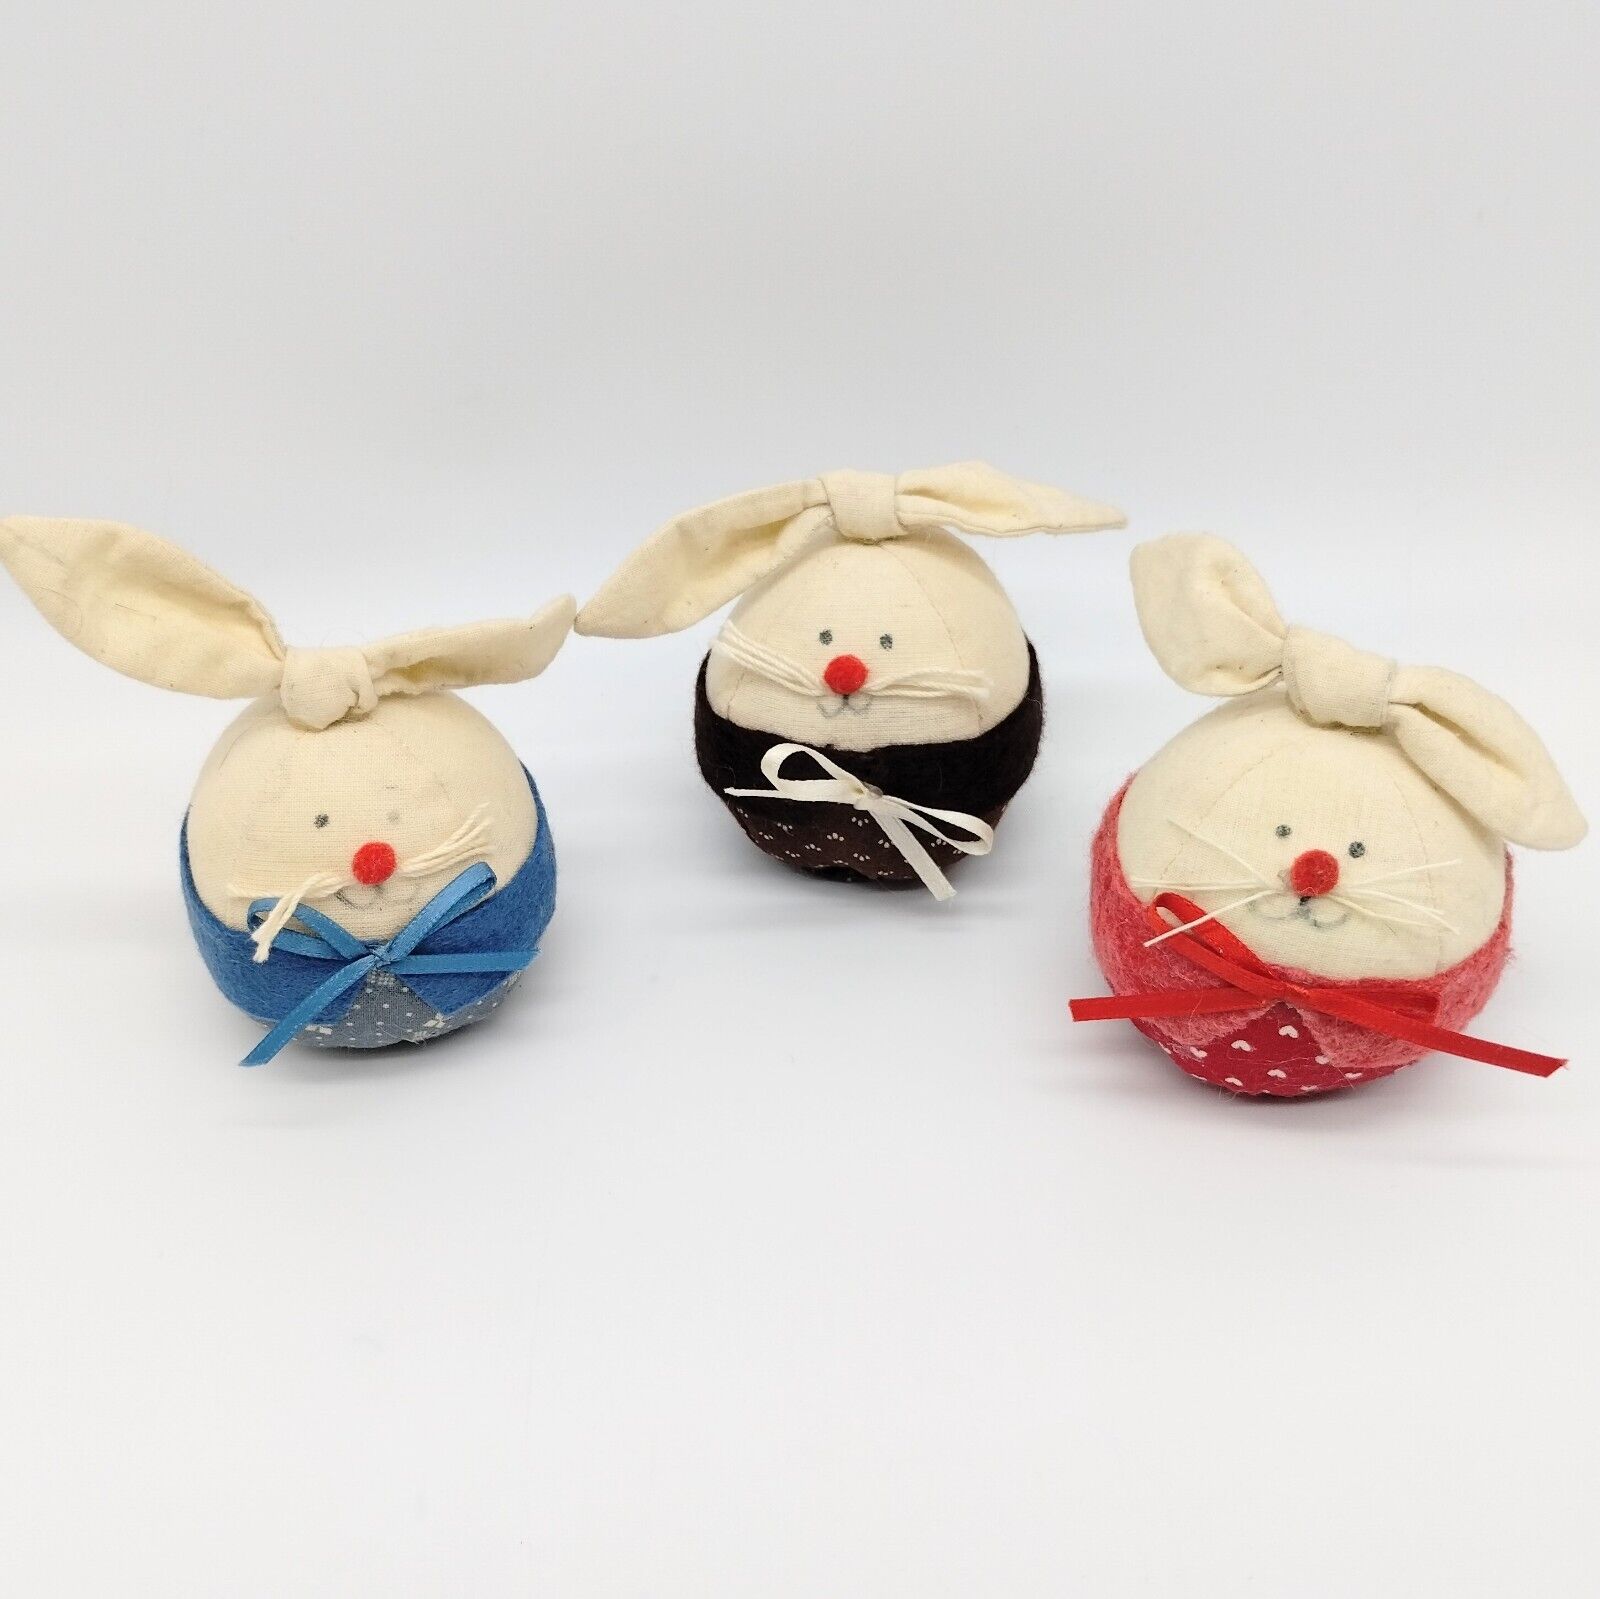 Lot of 3 Vintage Cotton Easter Bunnies Egg Ball Fabric Decoration Handmade Bunny